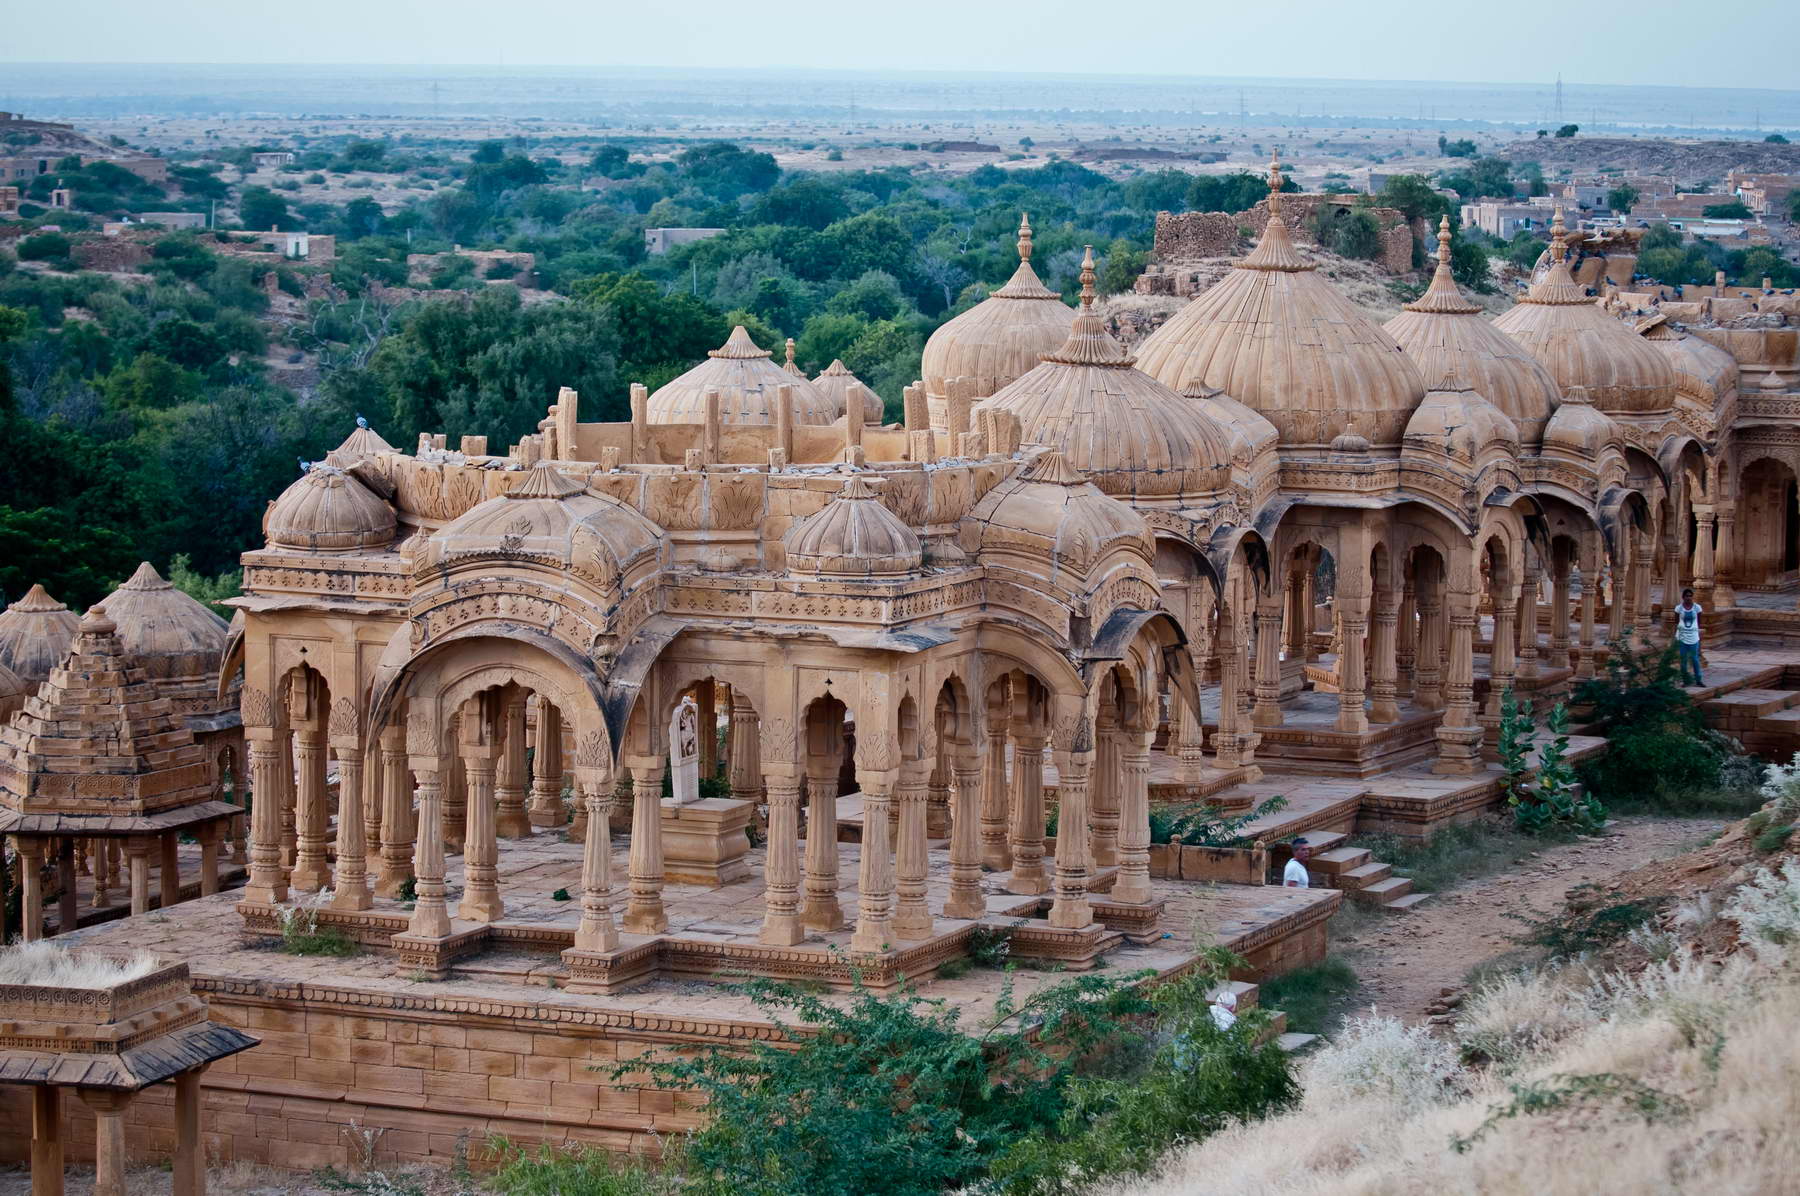 Les chhattris de Jaisalmer